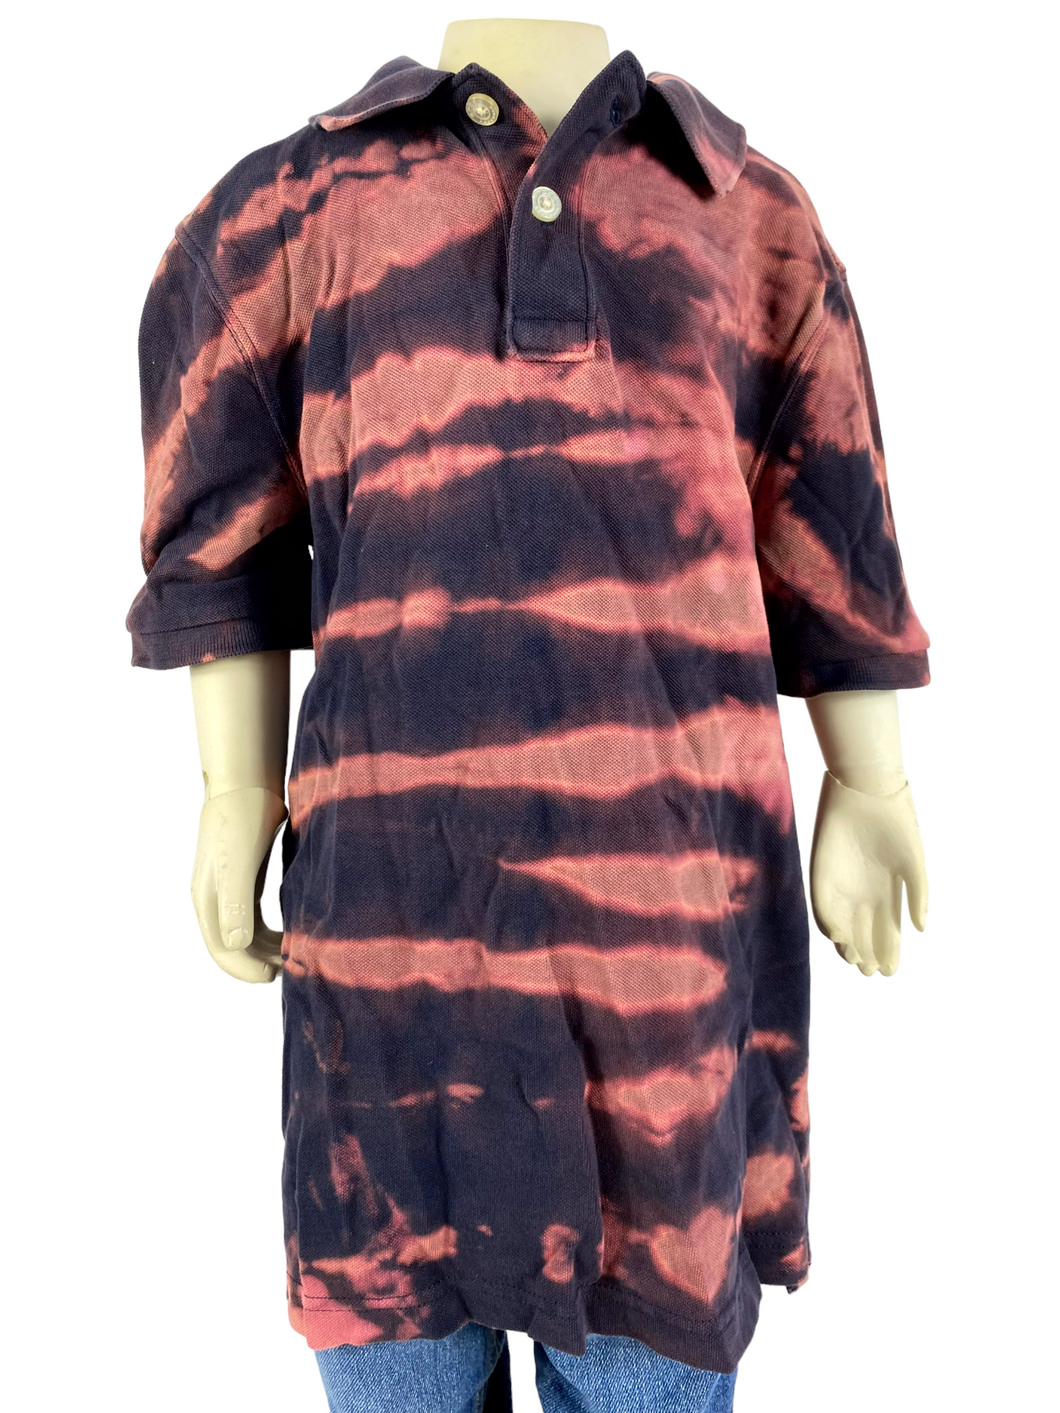 Tiger Striped Boys Polo Shirt - M (8/10)